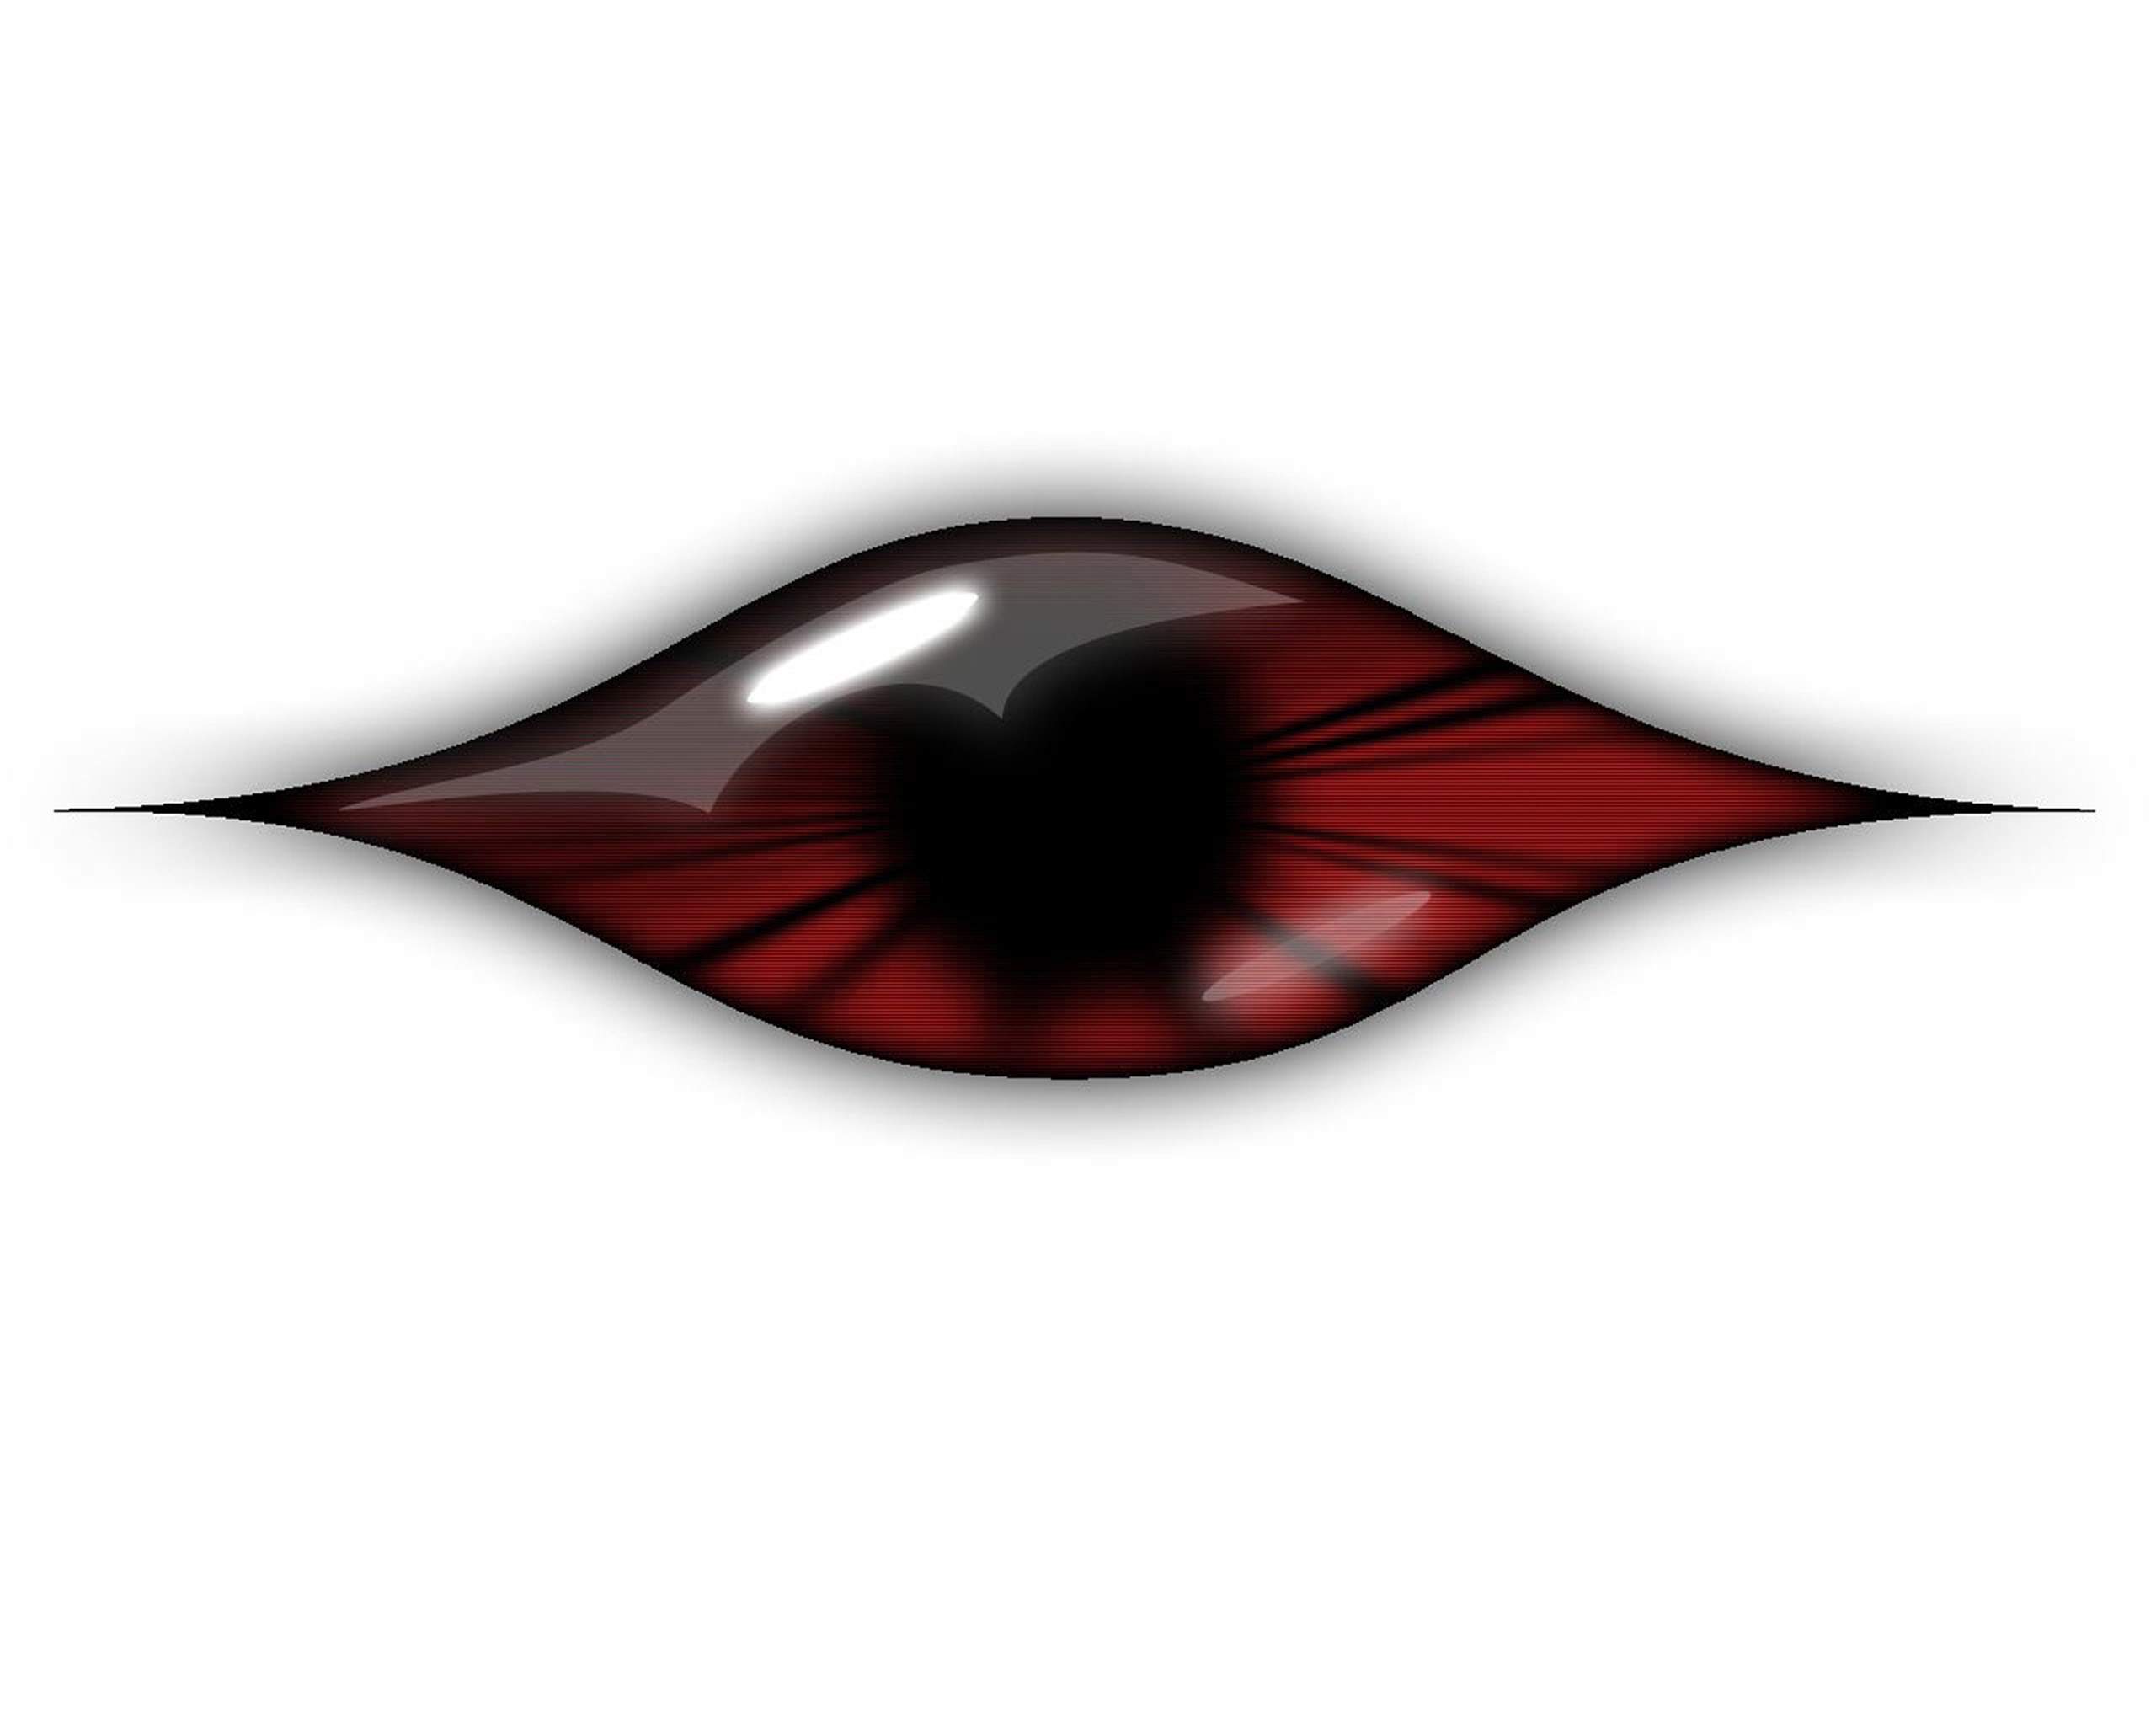 General 2560x2048 eyes minimalism digital art red white simple background white background red eyes